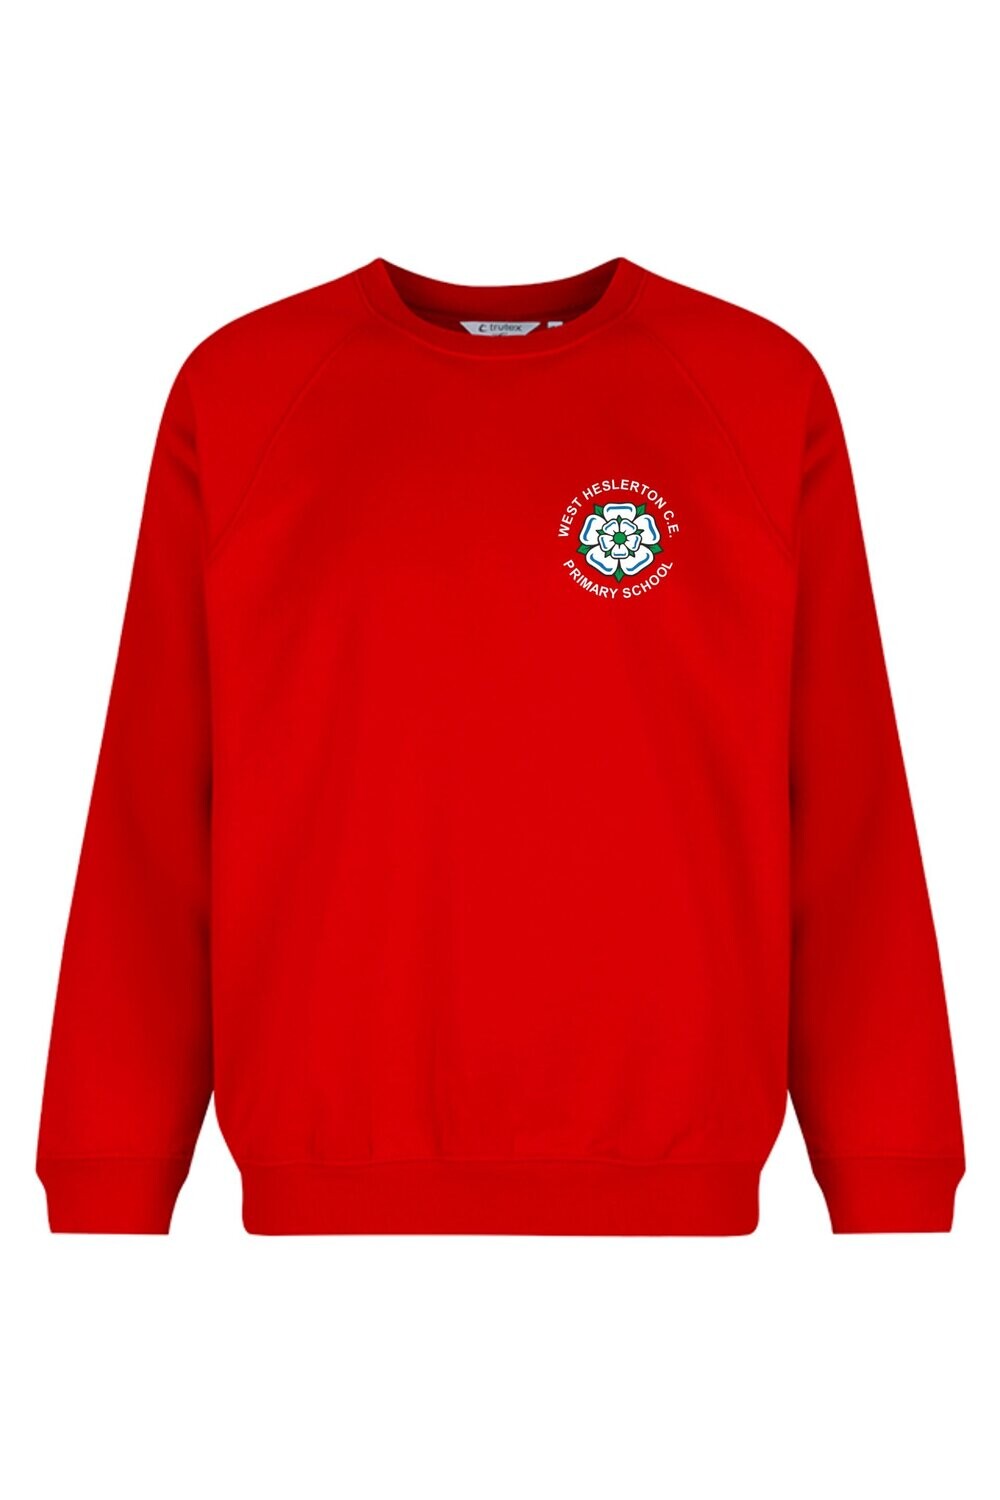 West Heslerton Red Sweatshirt